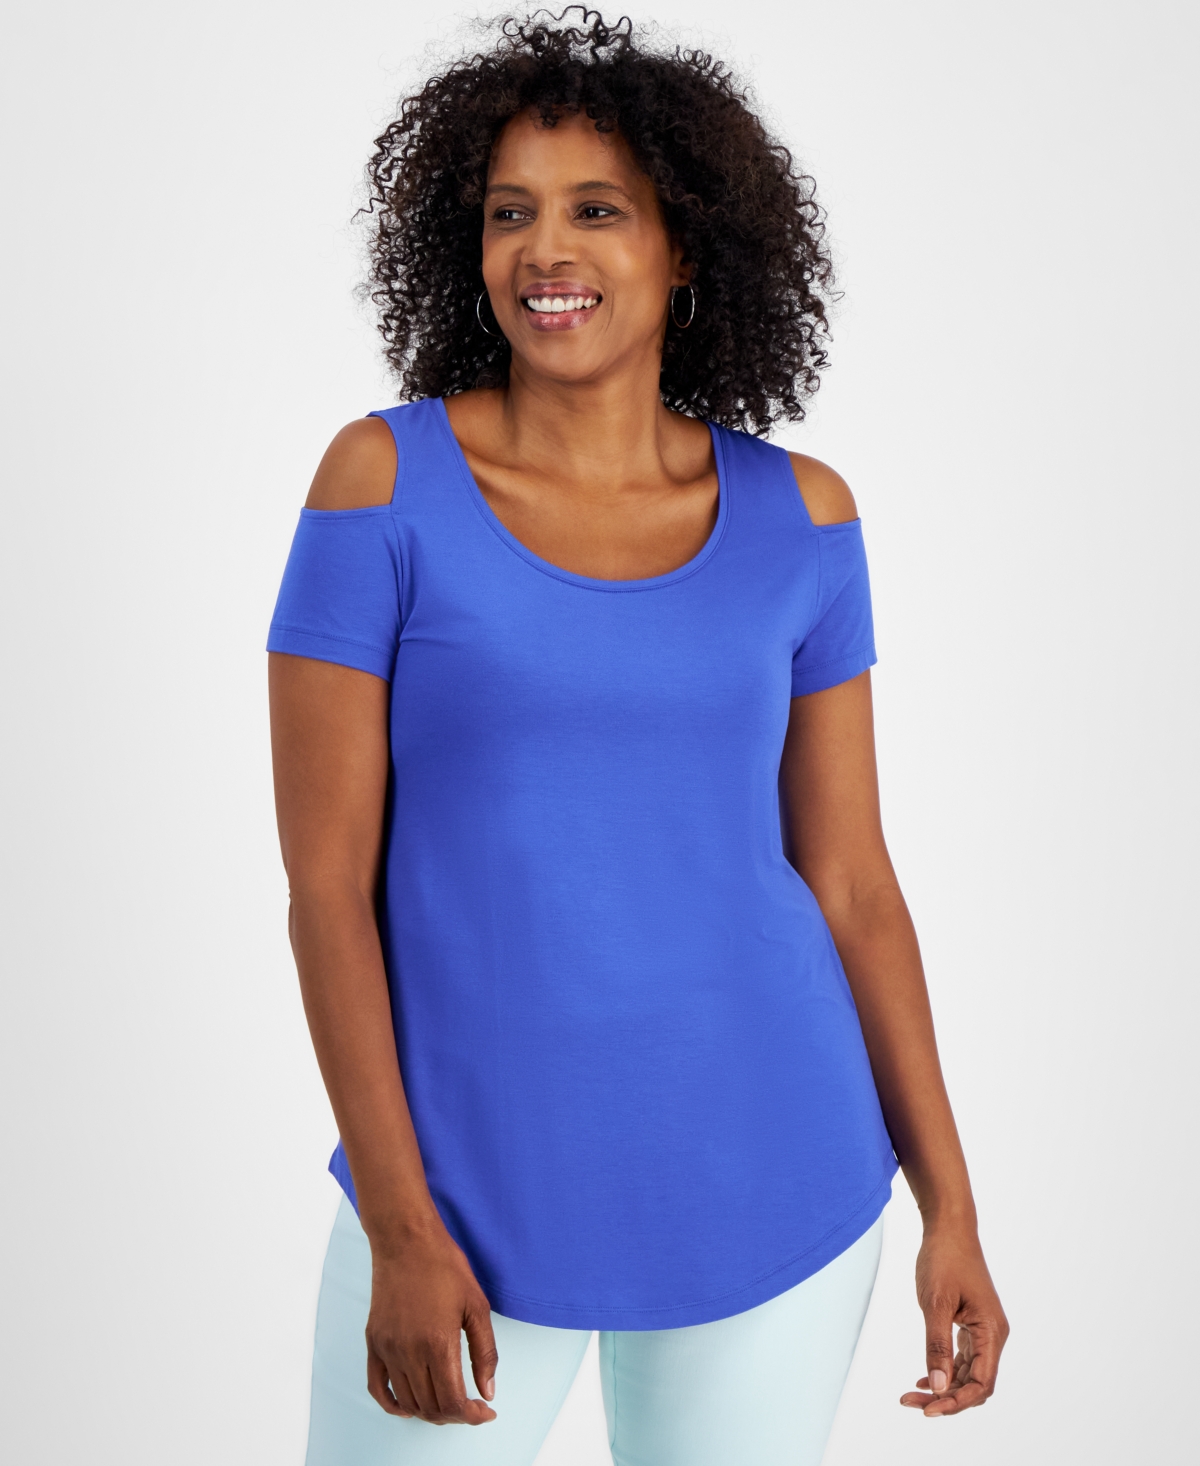 Women's Short Sleeve Scoop-Neck Cold-Shoulder Top, Created for Macy's - Demure Blue